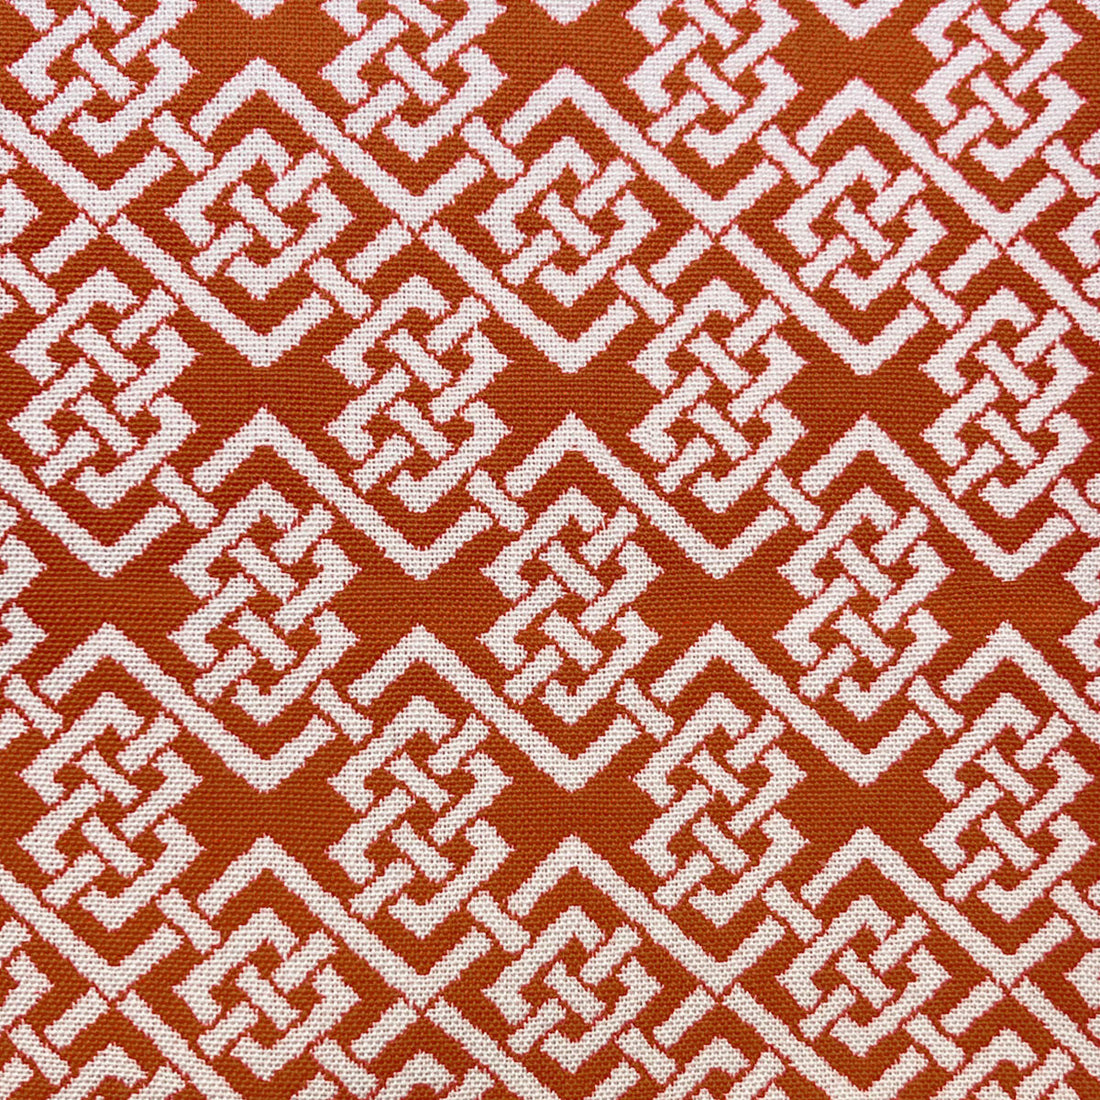 Ephraim fabric in teja color - pattern LCT1055.003.0 - by Gaston y Daniela in the Lorenzo Castillo VI collection